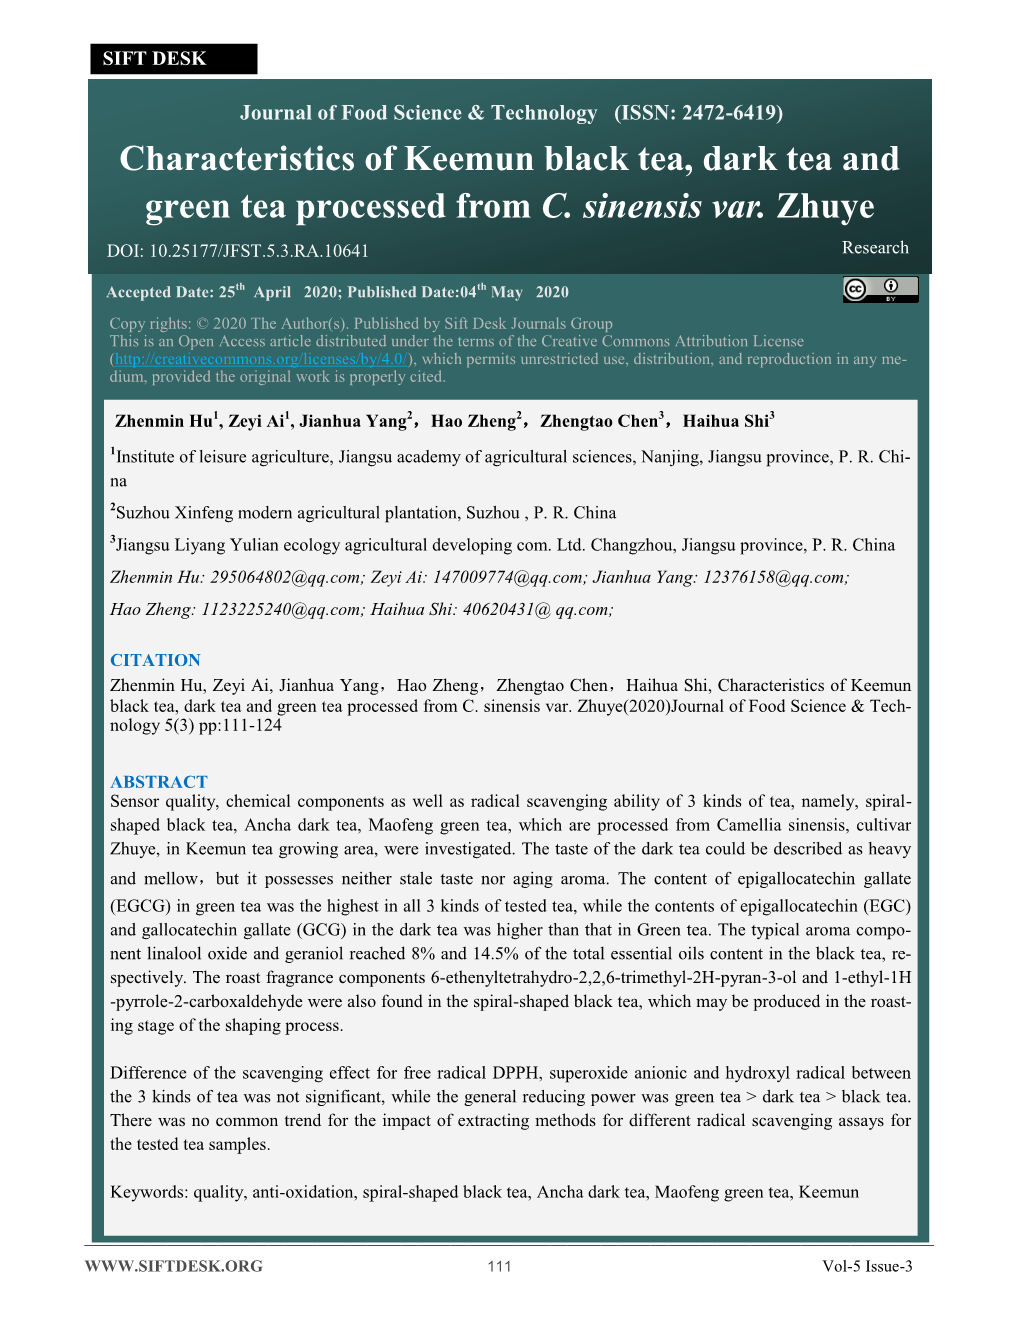 Characteristics of Keemun Black Tea, Dark Tea and Green Tea Processed from C. Sinensis Var. Zhuye DOI: 10.25177/JFST.5.3.RA.10641 Research